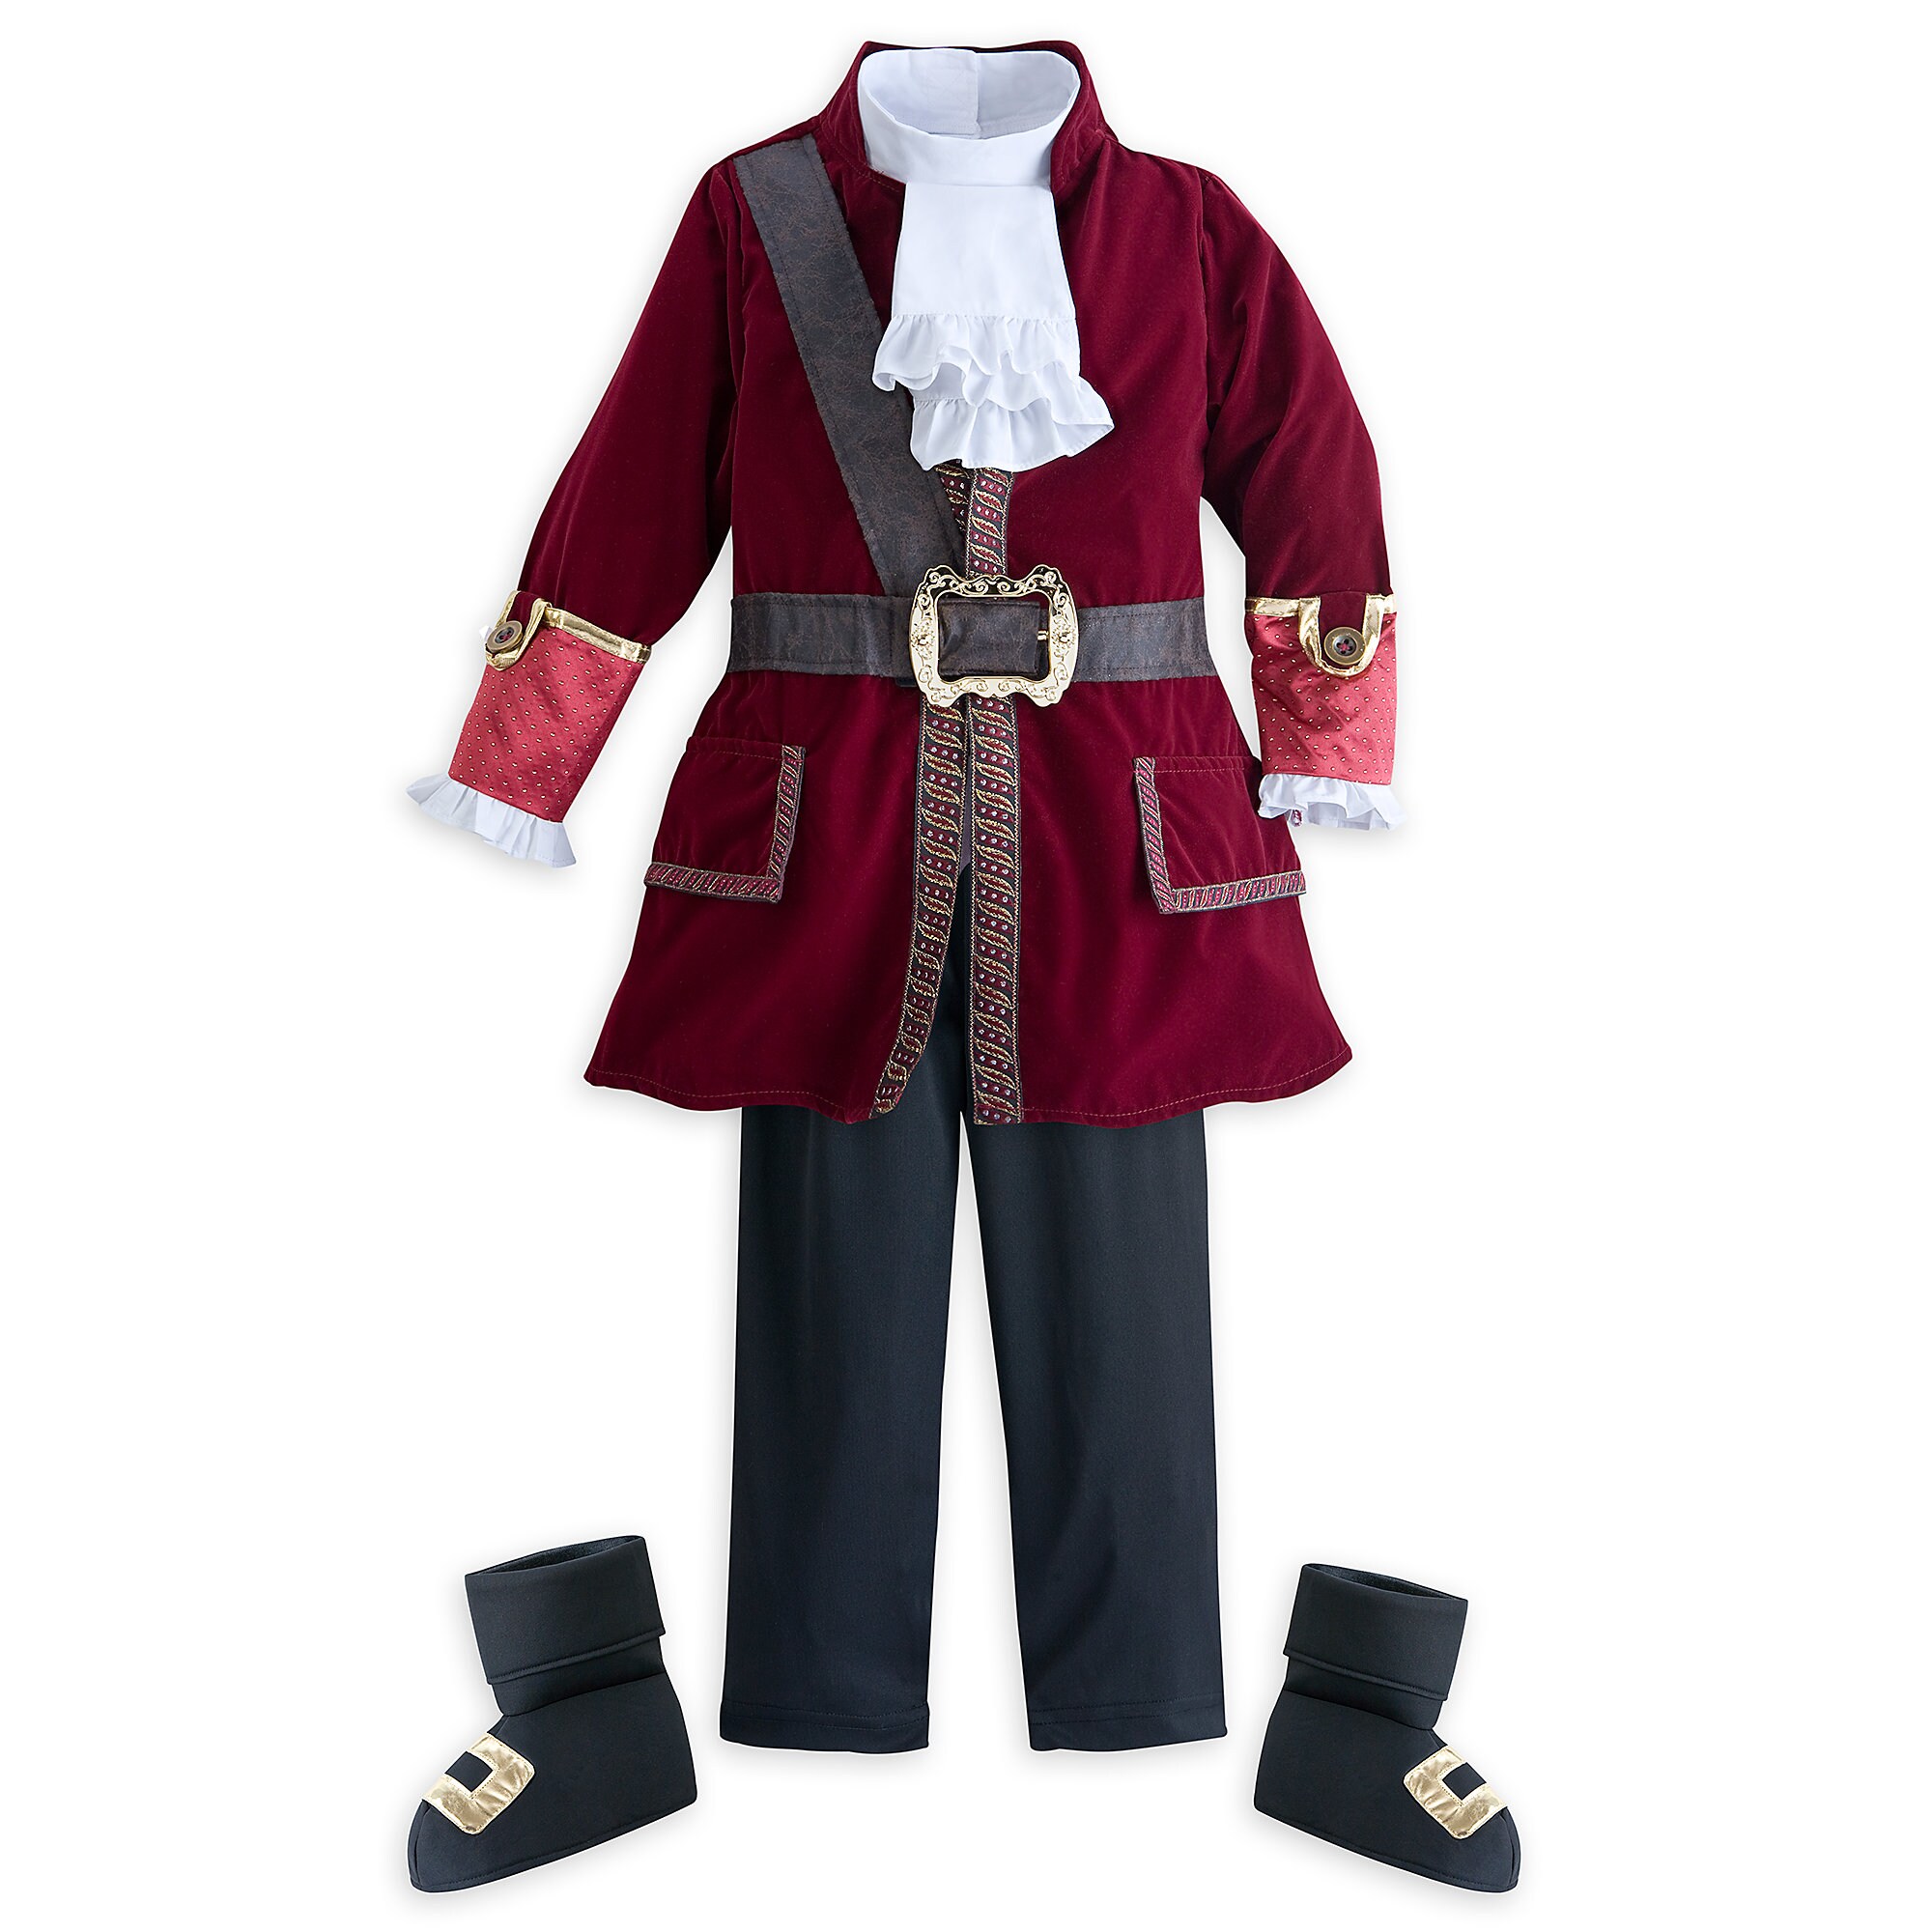 Captain Hook Costume for Kids - Peter Pan